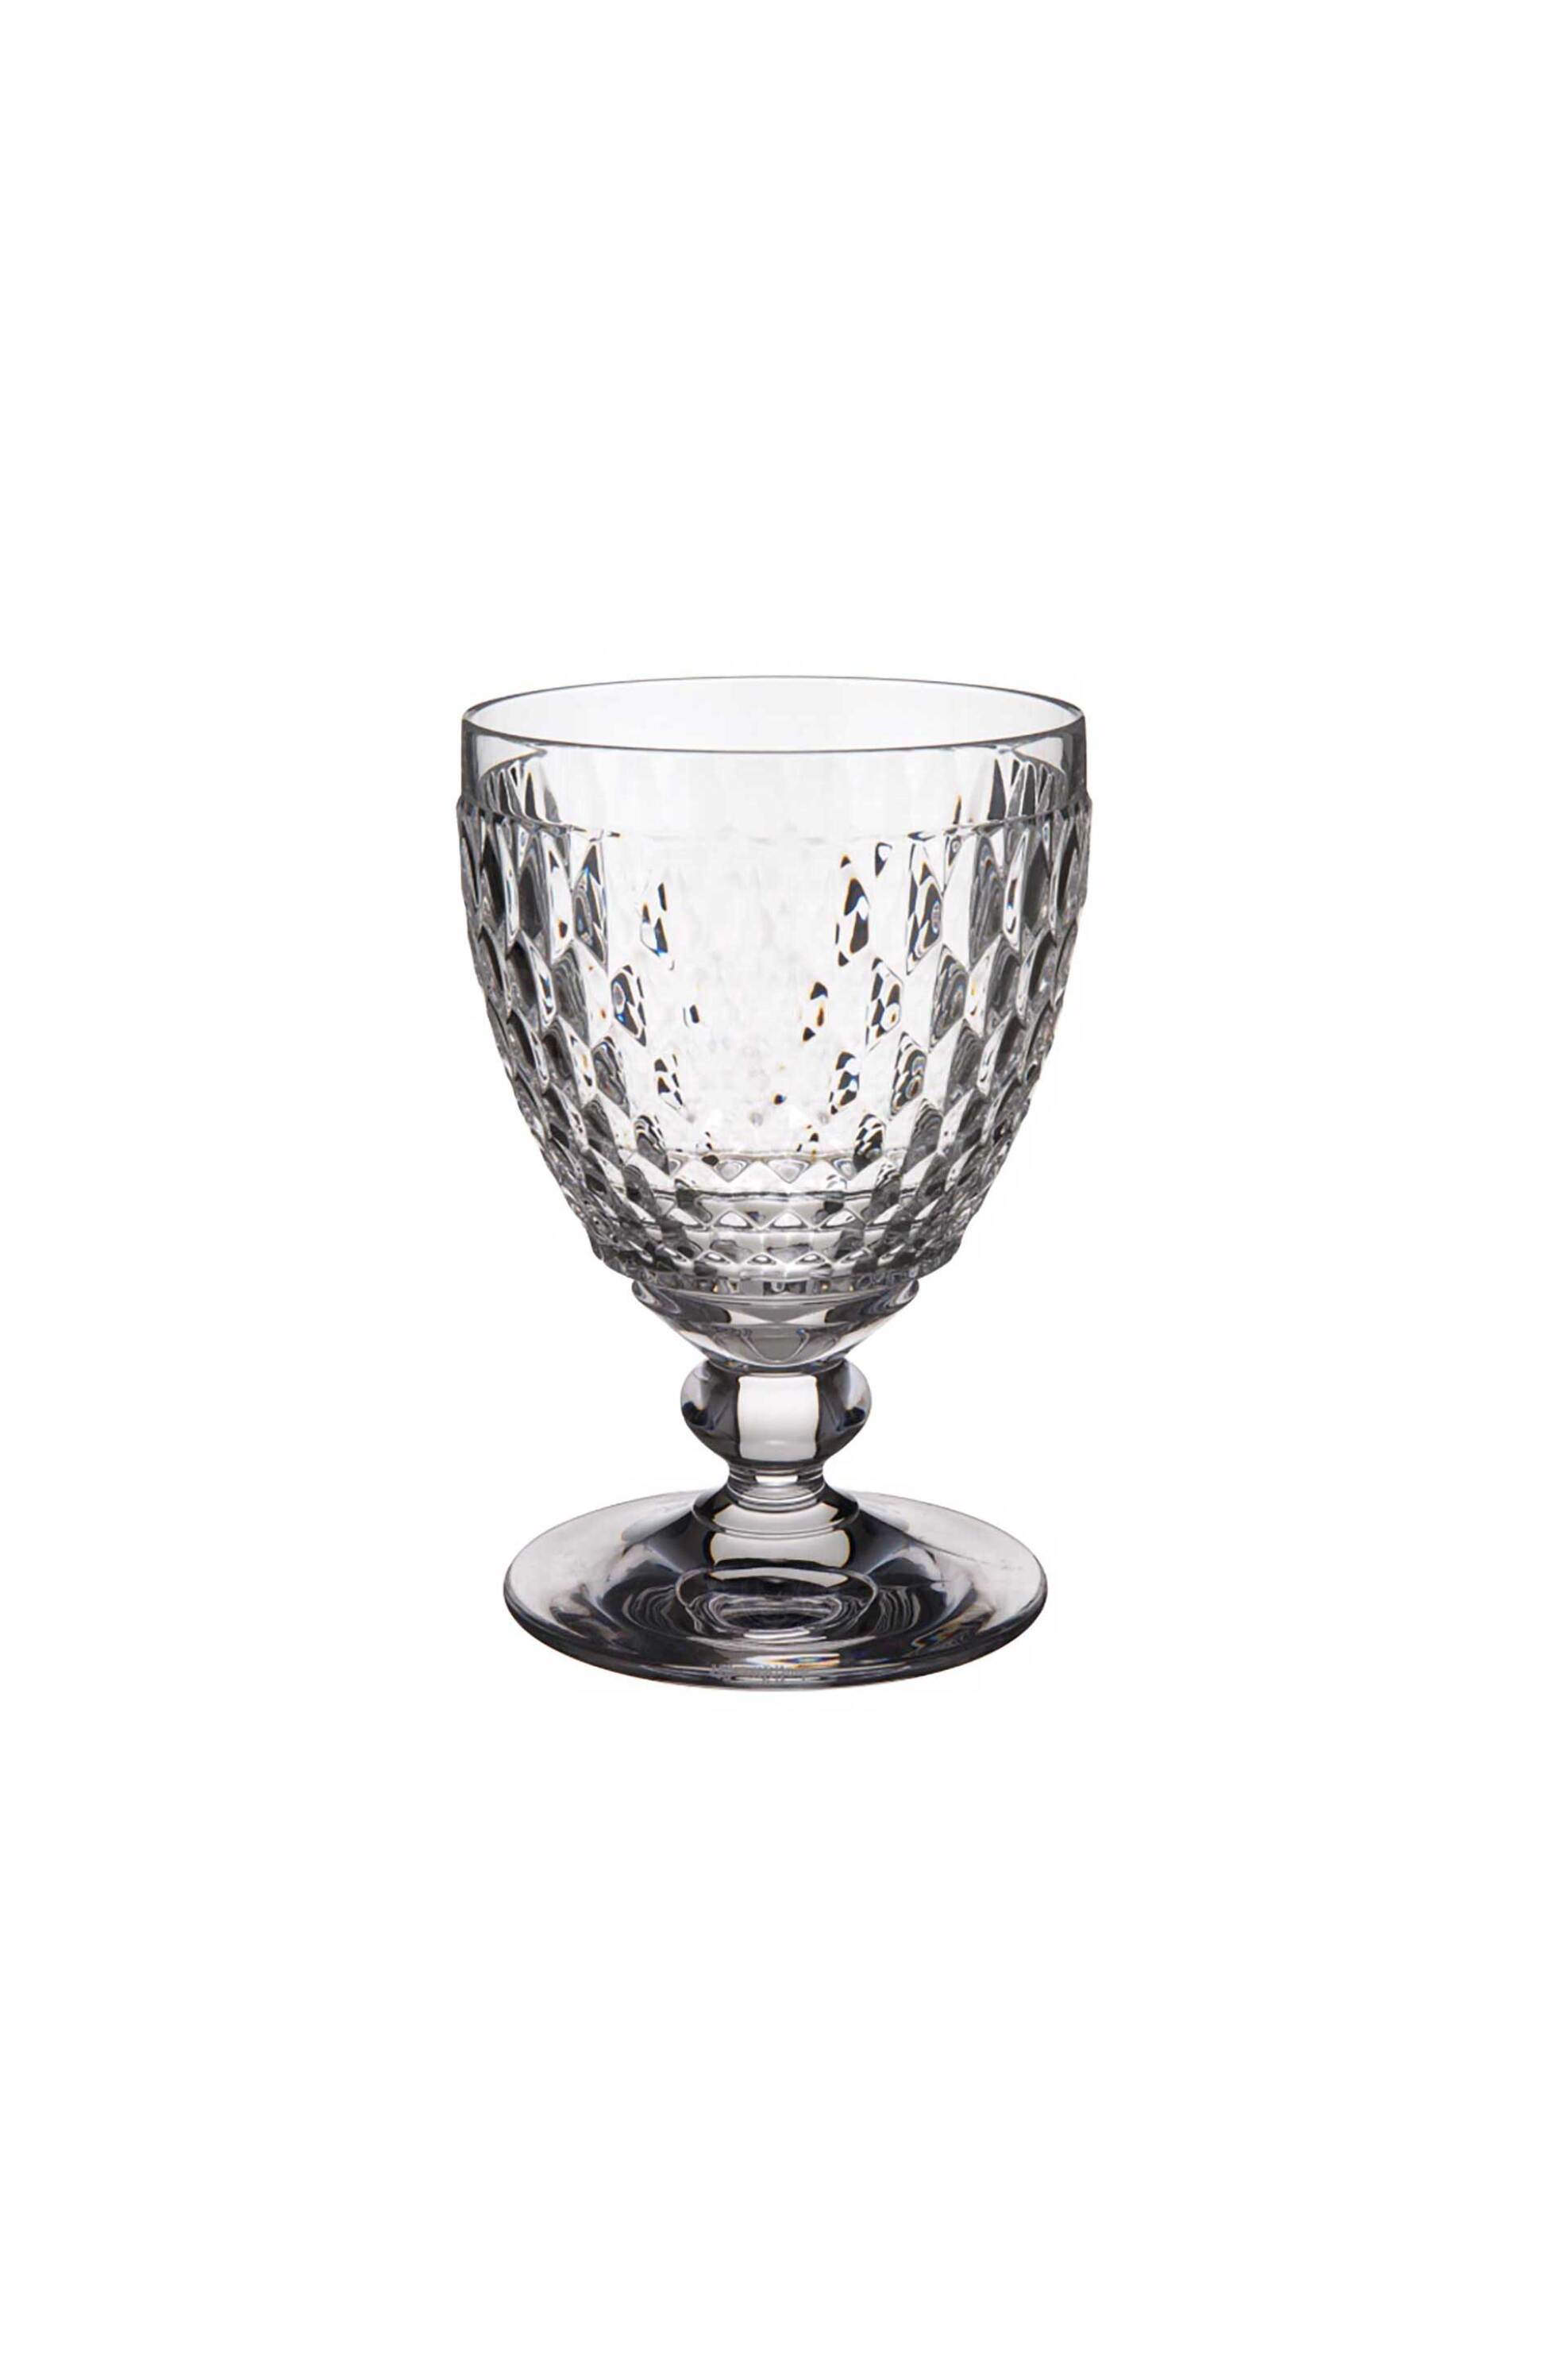 Home > ΚΟΥΖΙΝΑ > Υαλικά > Ποτήρια Villeroy & Boch κρυστάλλινο ποτήρι νερού με ανάγλυφο σχέδιο "Boston" 9.5 cm - 7299-0130